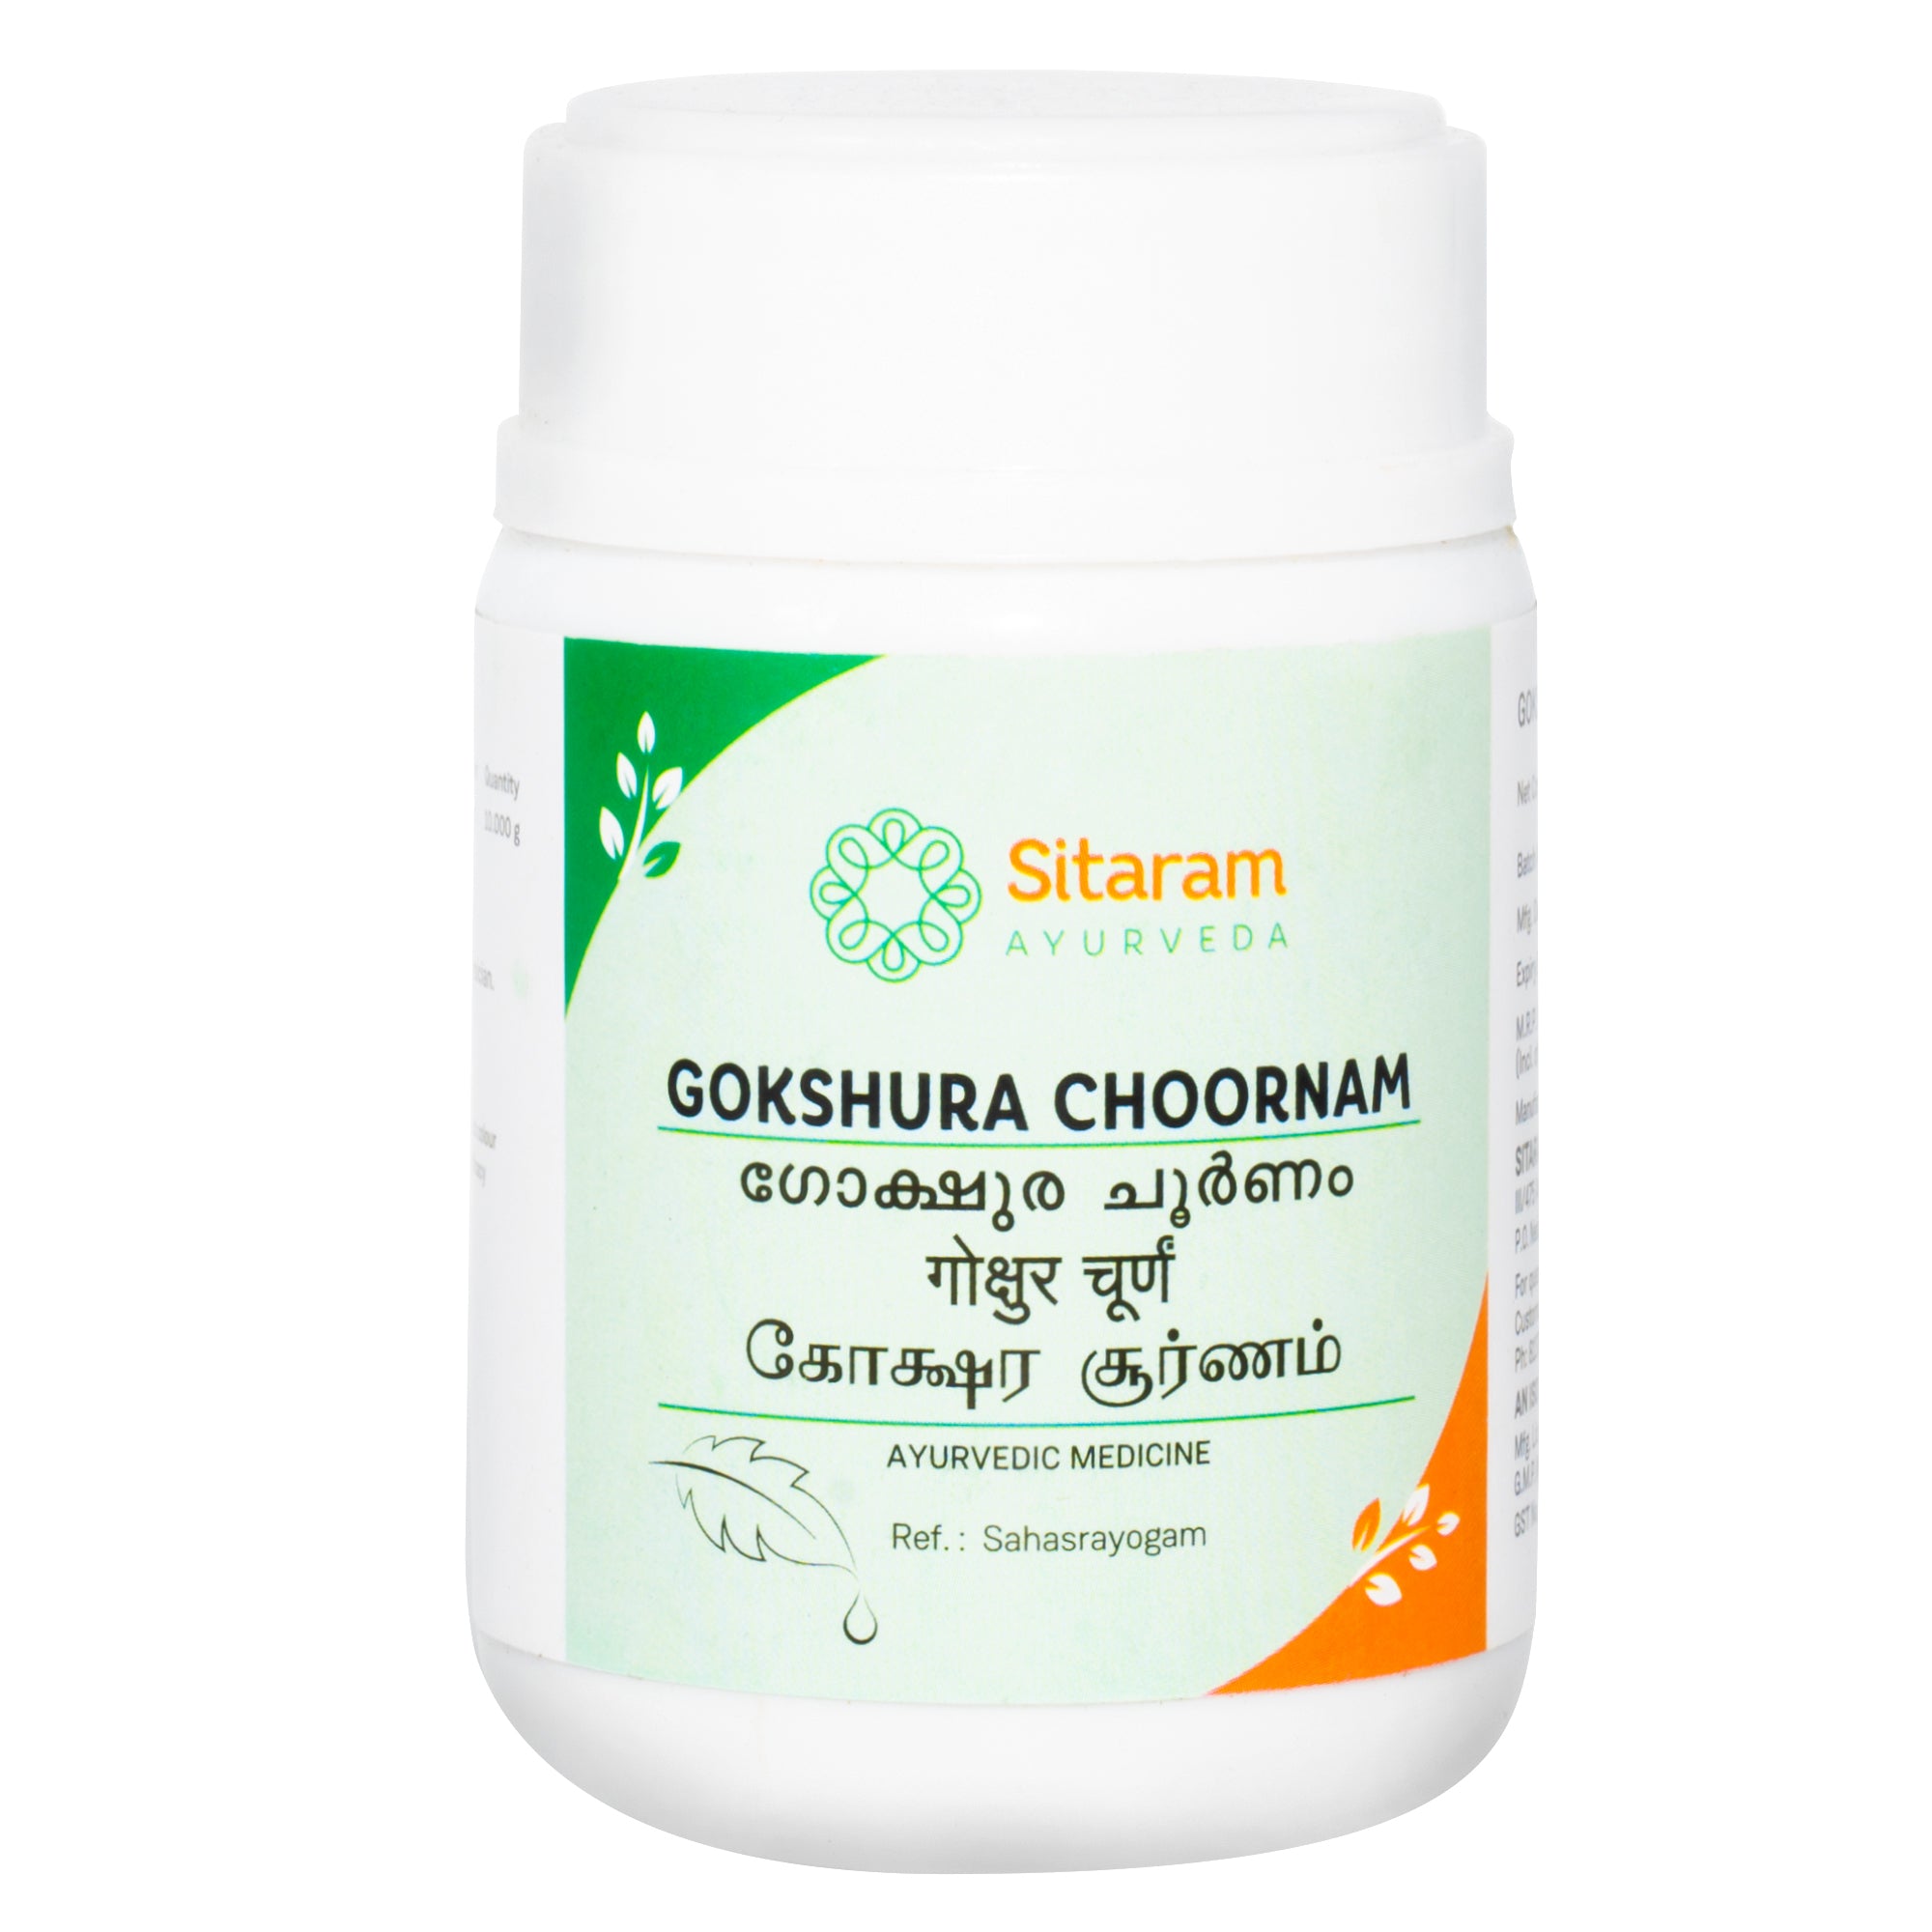 Sitaram Ayurveda Gokshura Choornam 50Gm - Pack of 2 (Prescription Medication)